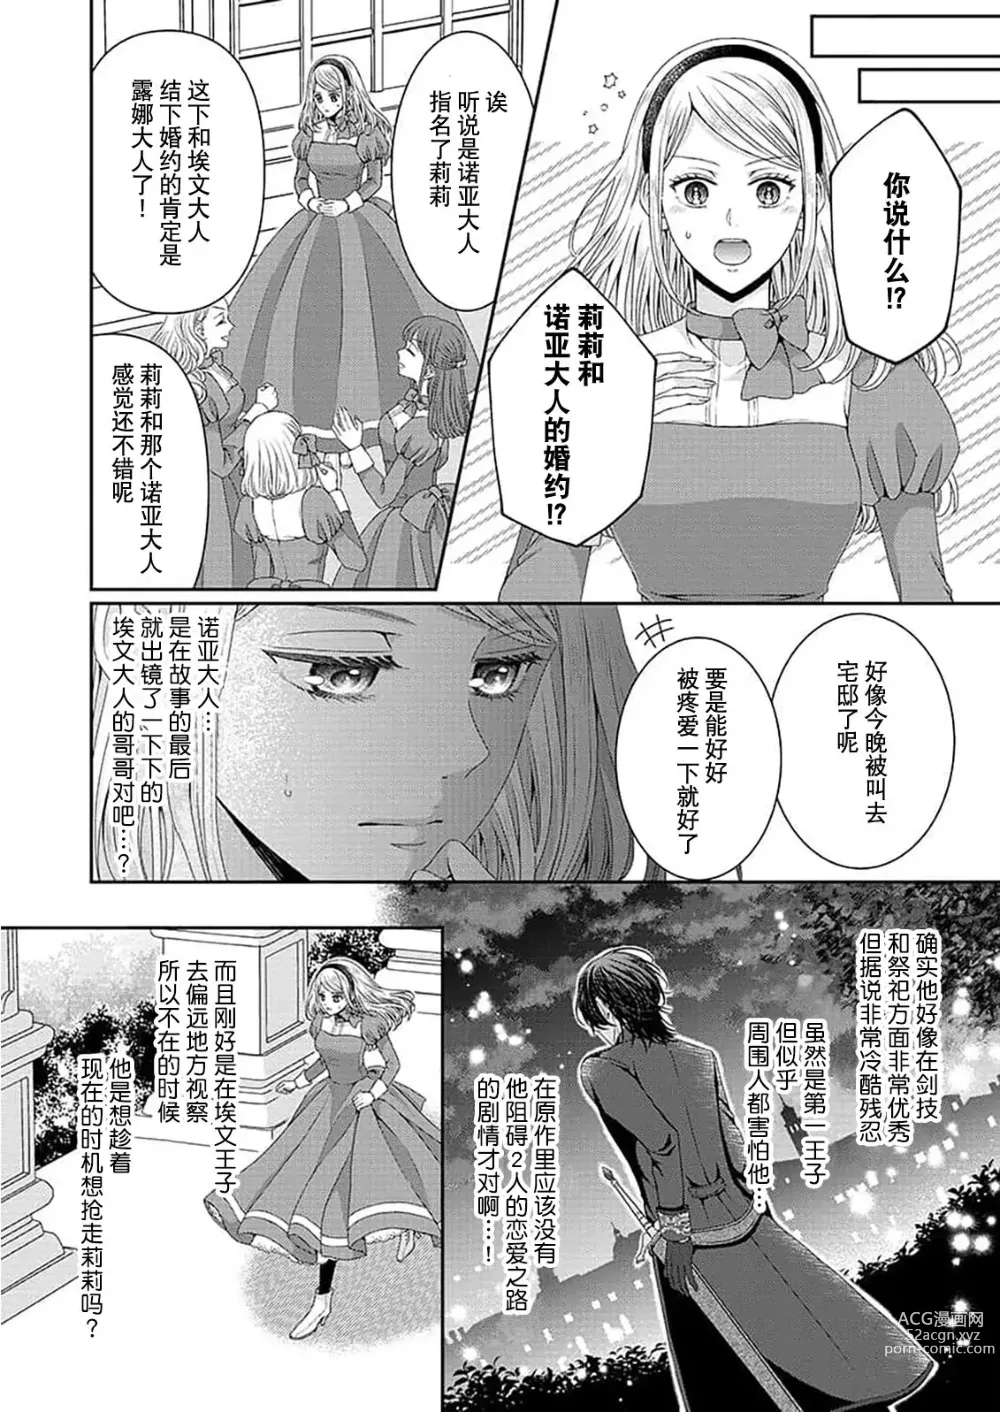 Page 6 of manga 然后你会自投罗网~冷酷王子甜蜜狡猾的陷阱